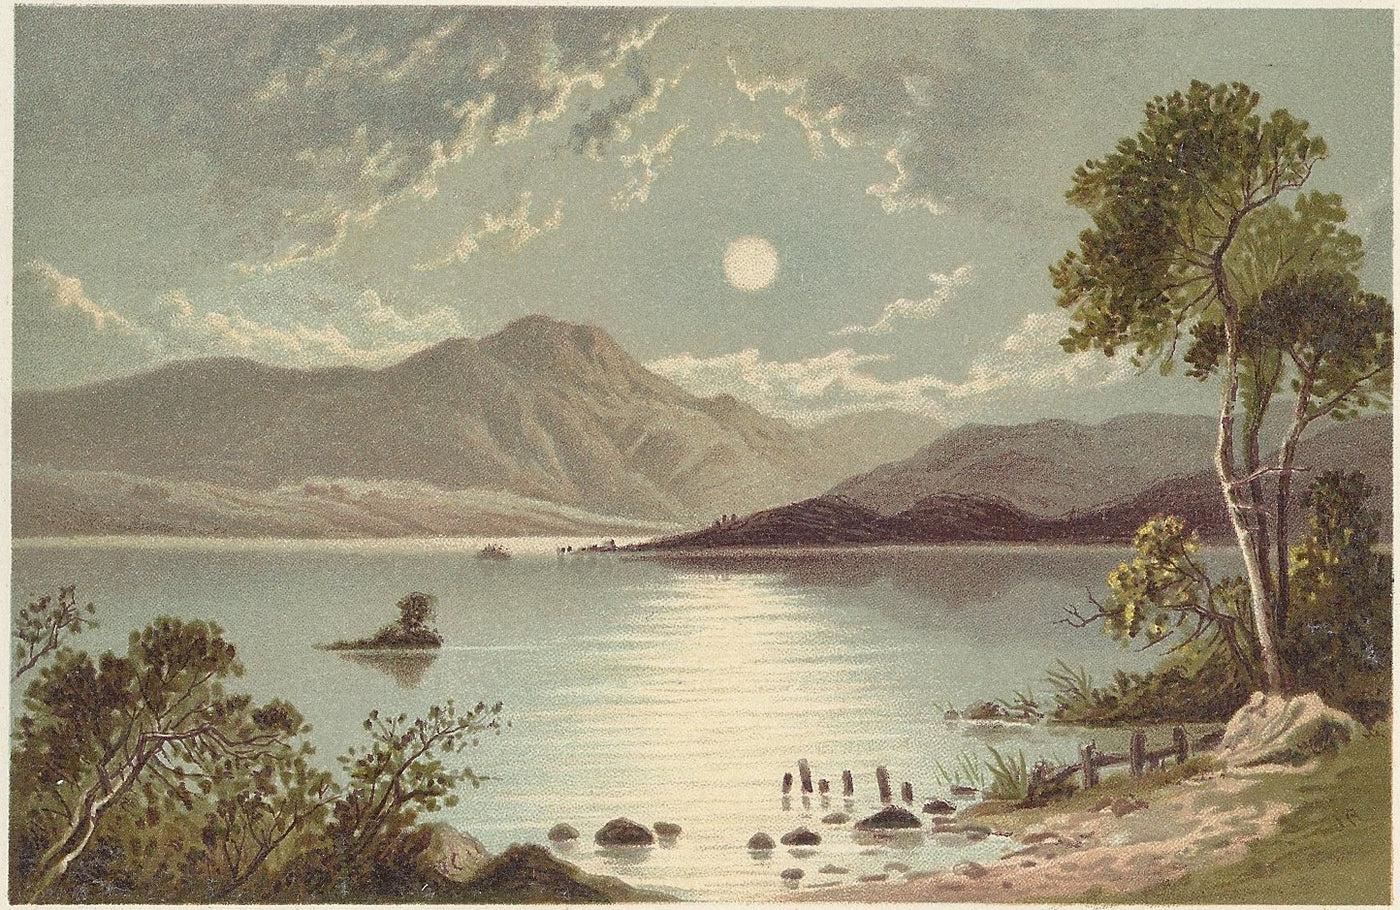 Loch Vennachar or Venachar Scotland antique print